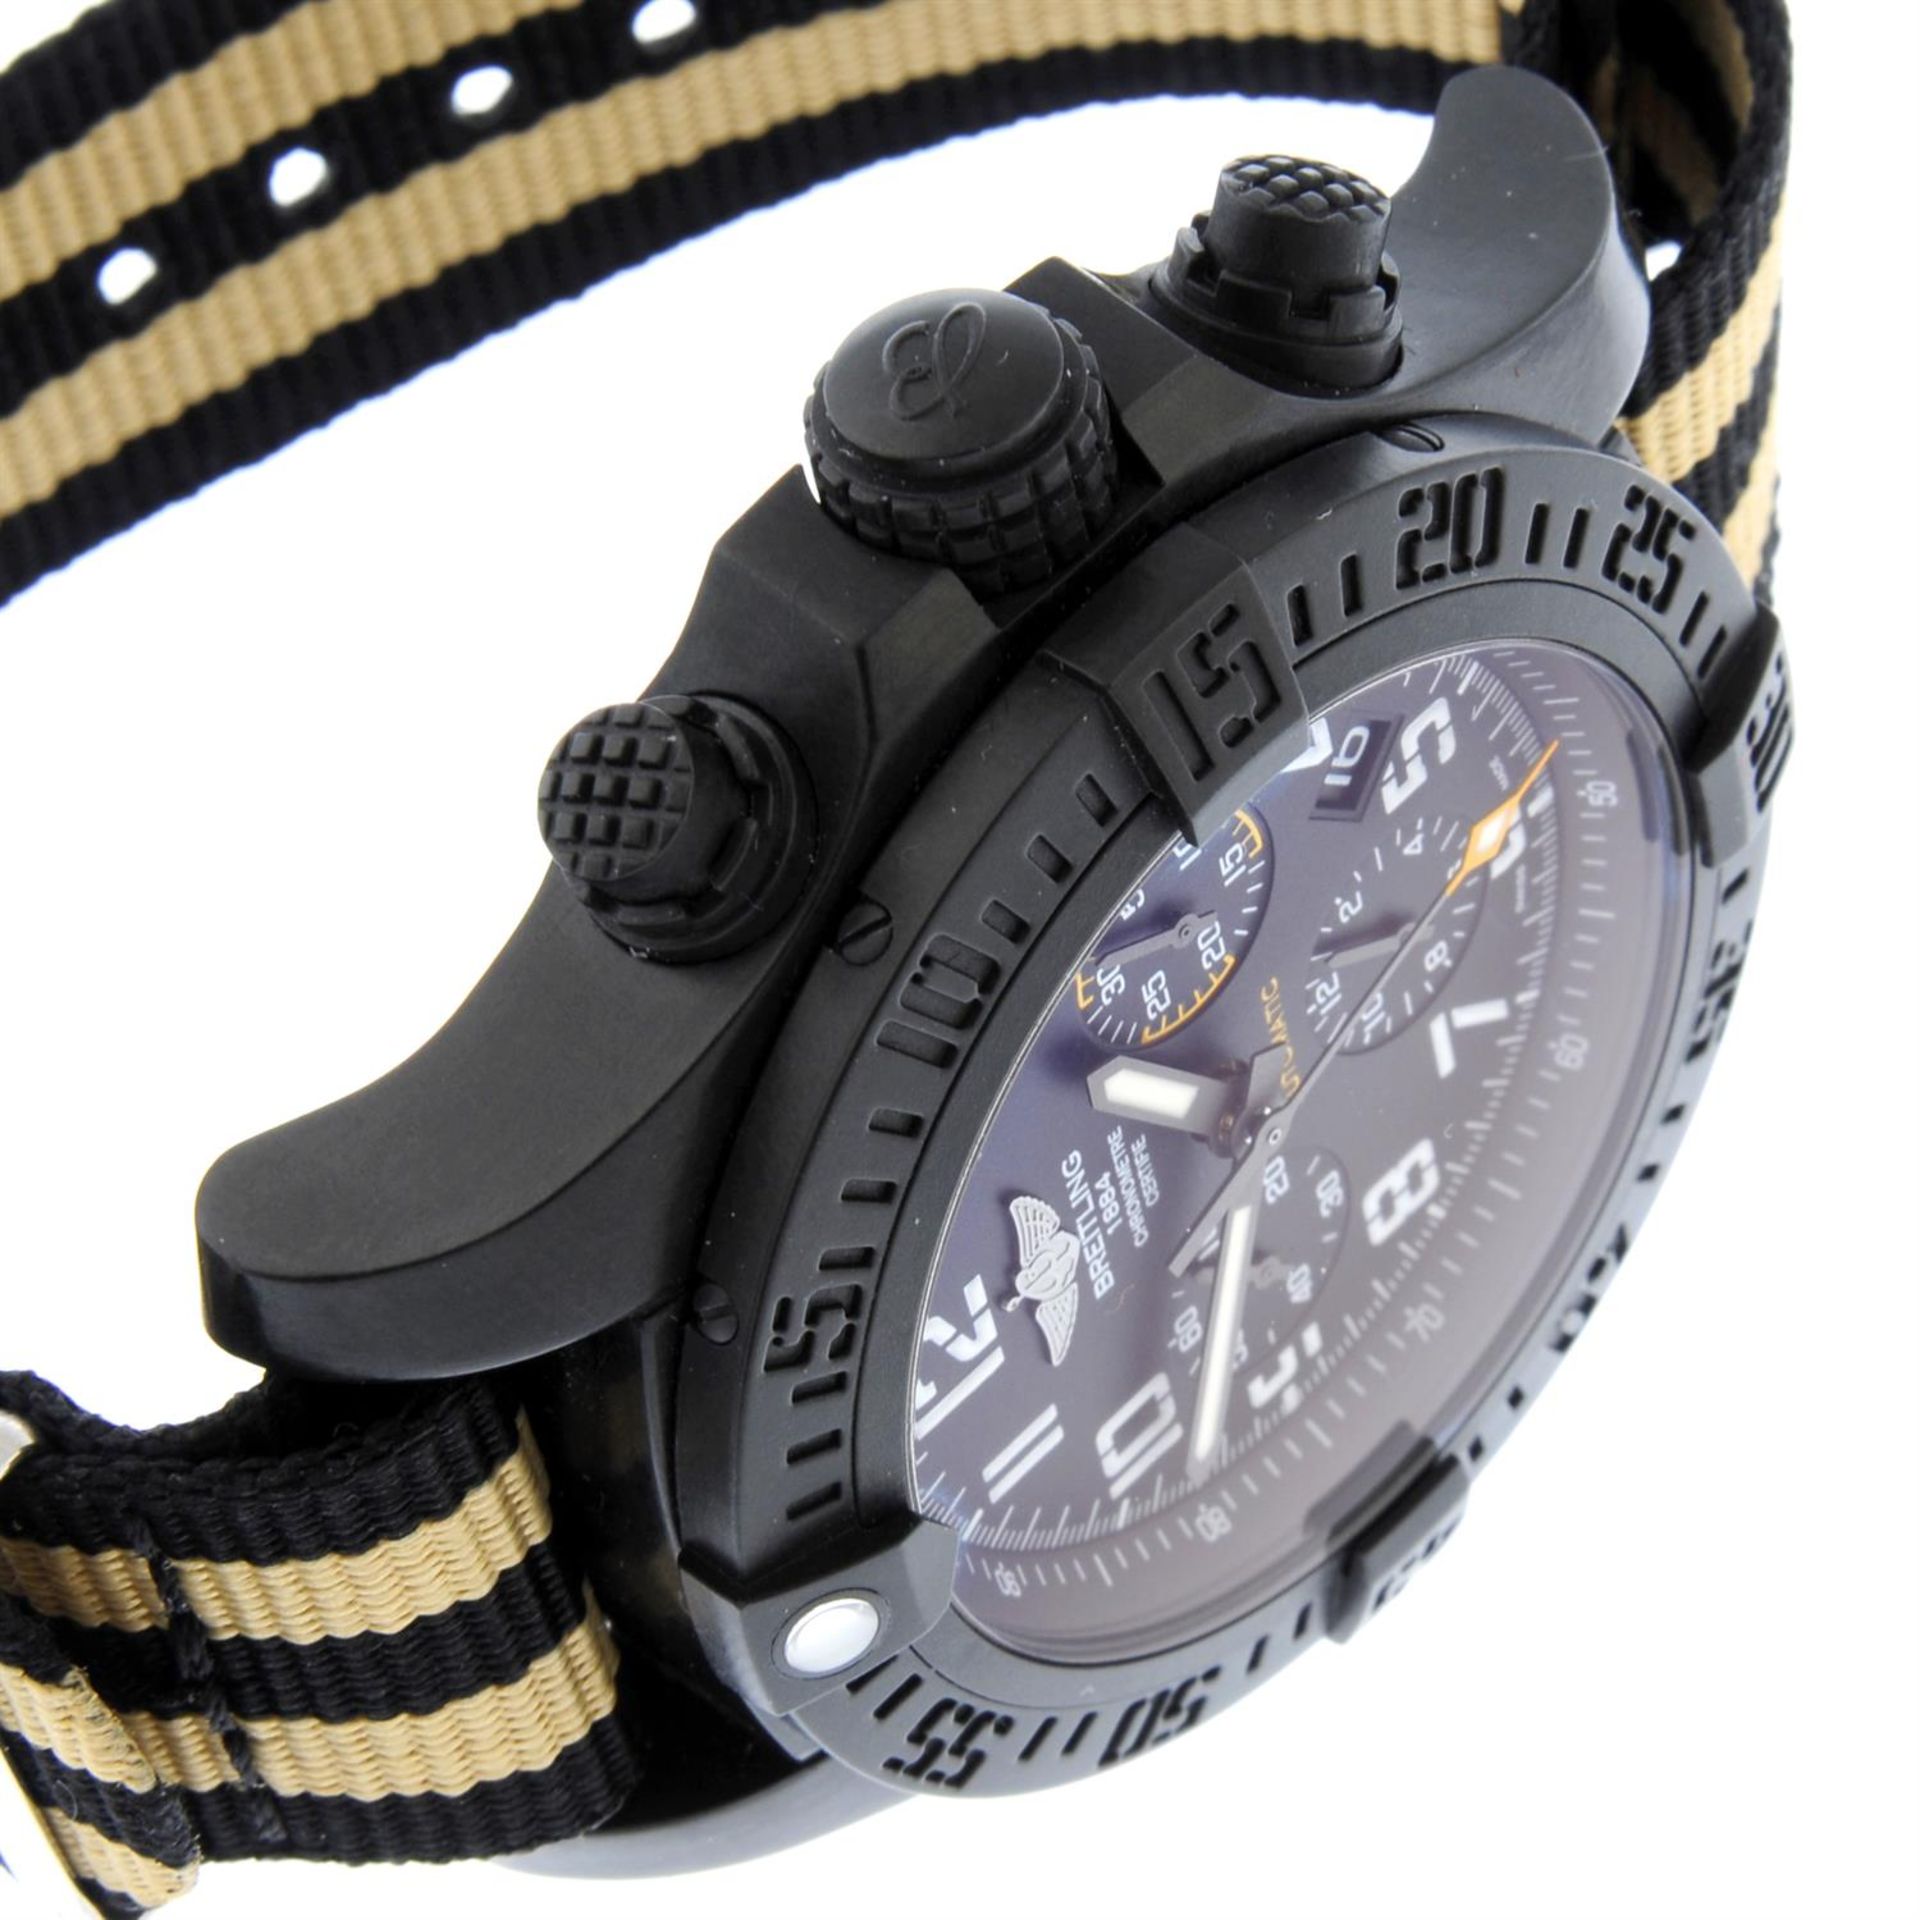 BREITLING - a Breitlight Avenger Hurricane chronograph wrist watch, 45mm. - Image 3 of 5